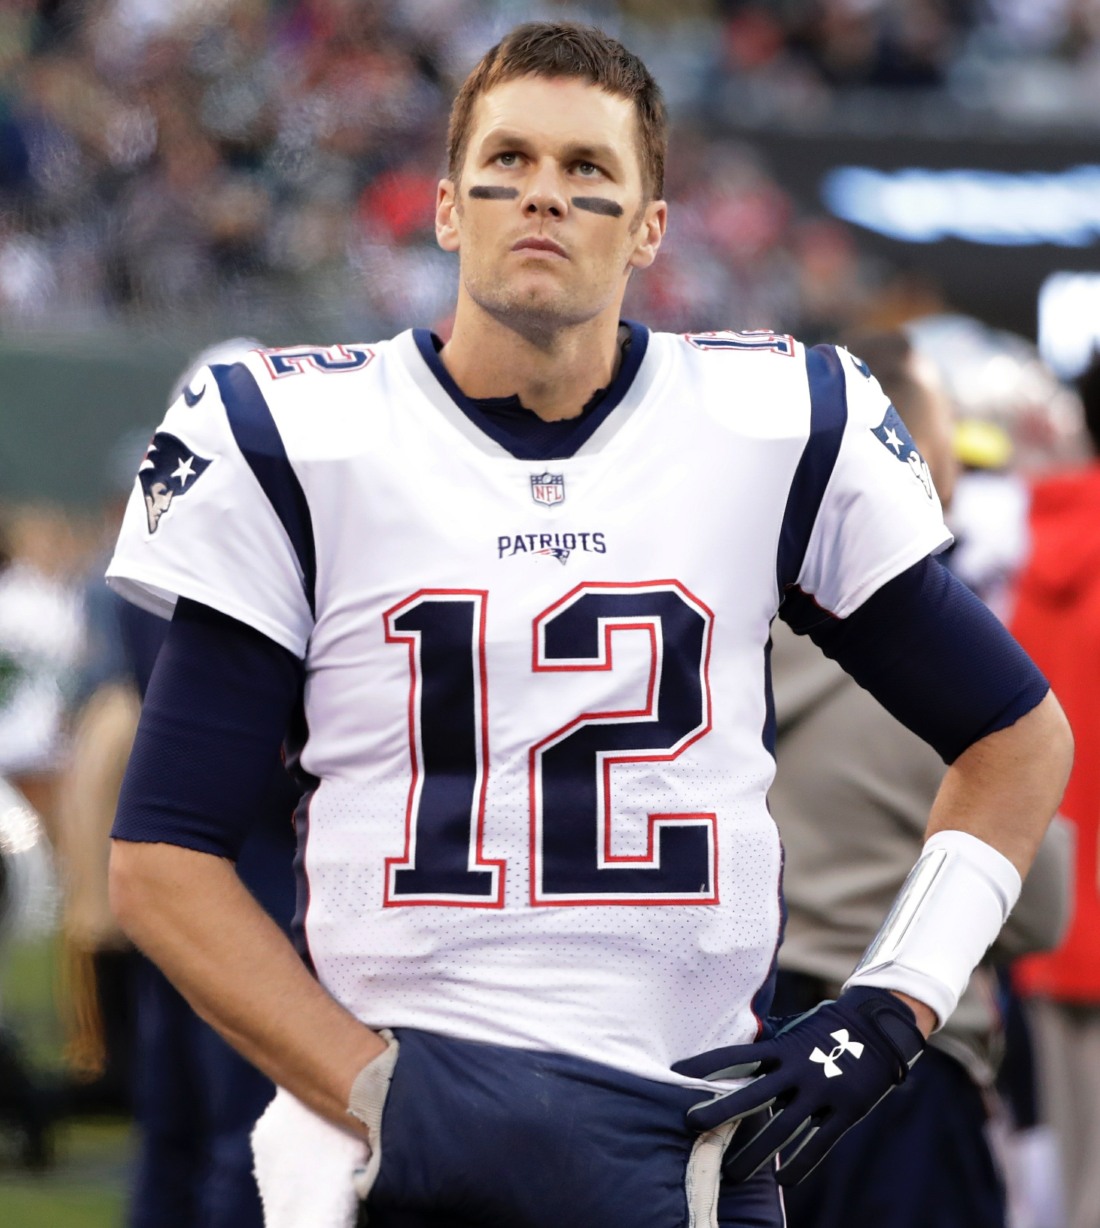 New England Patriots Quarterback Tom Brady plays against the NY Jets at the Giants Stadium